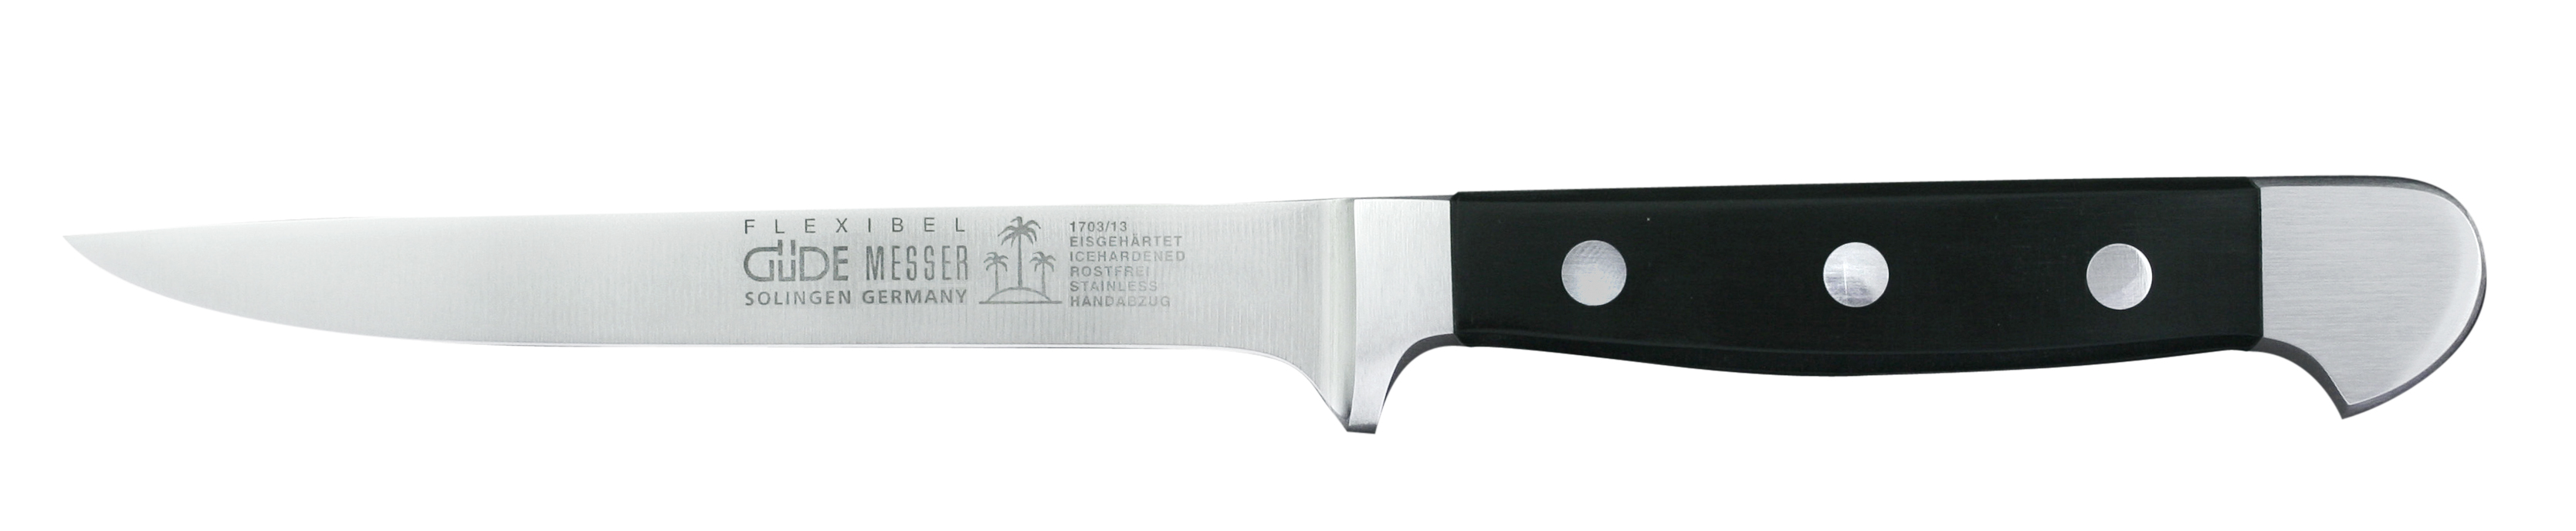 Güde Alpha Ausbeinmesser 13 cm flexibel - CVM-Messerstahl mit Griffschalen aus Hostaform